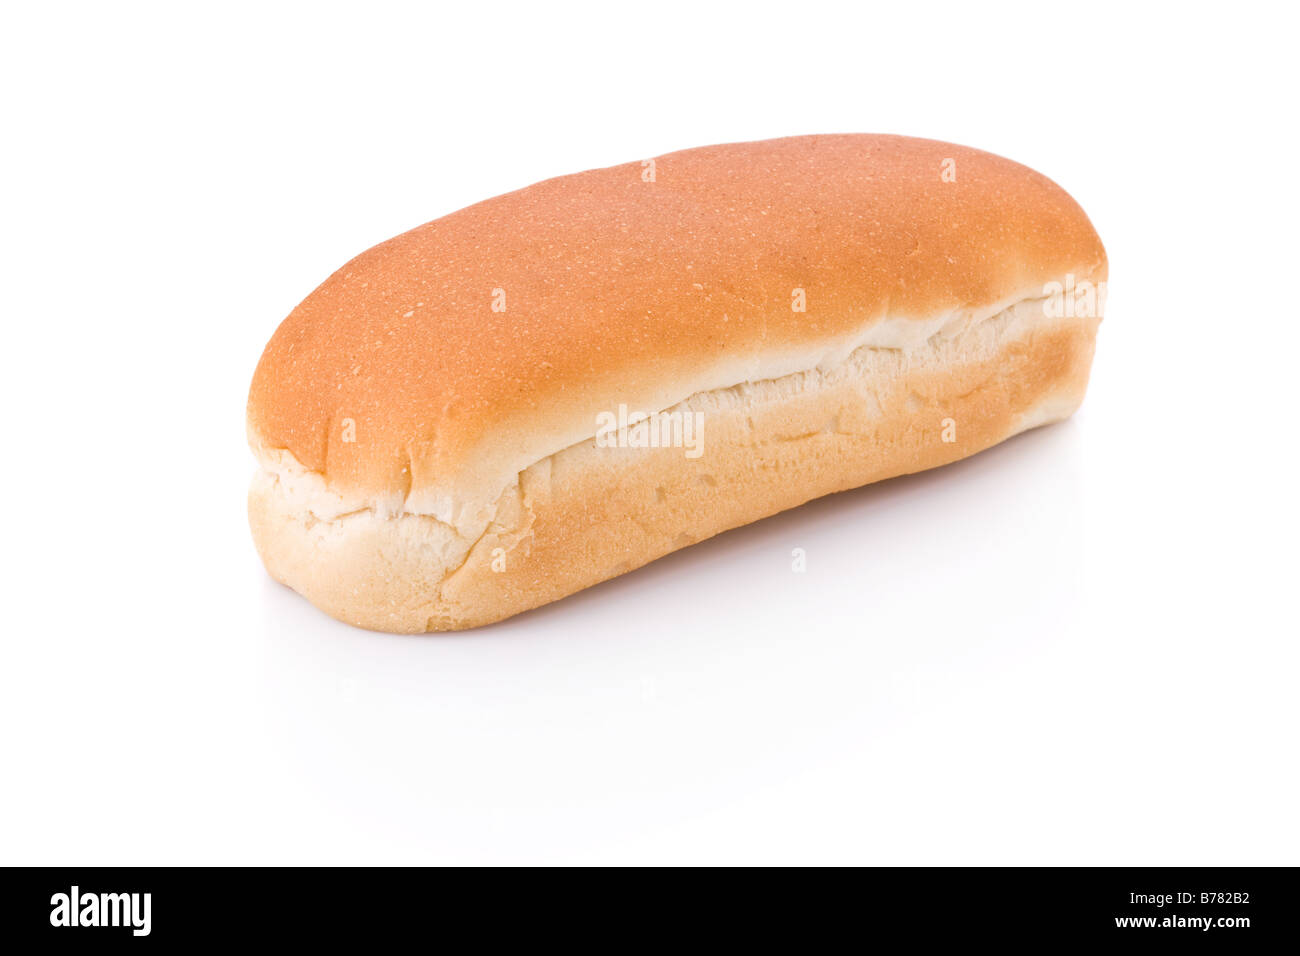 Hotdog bun isolated on a white background Stock Photo